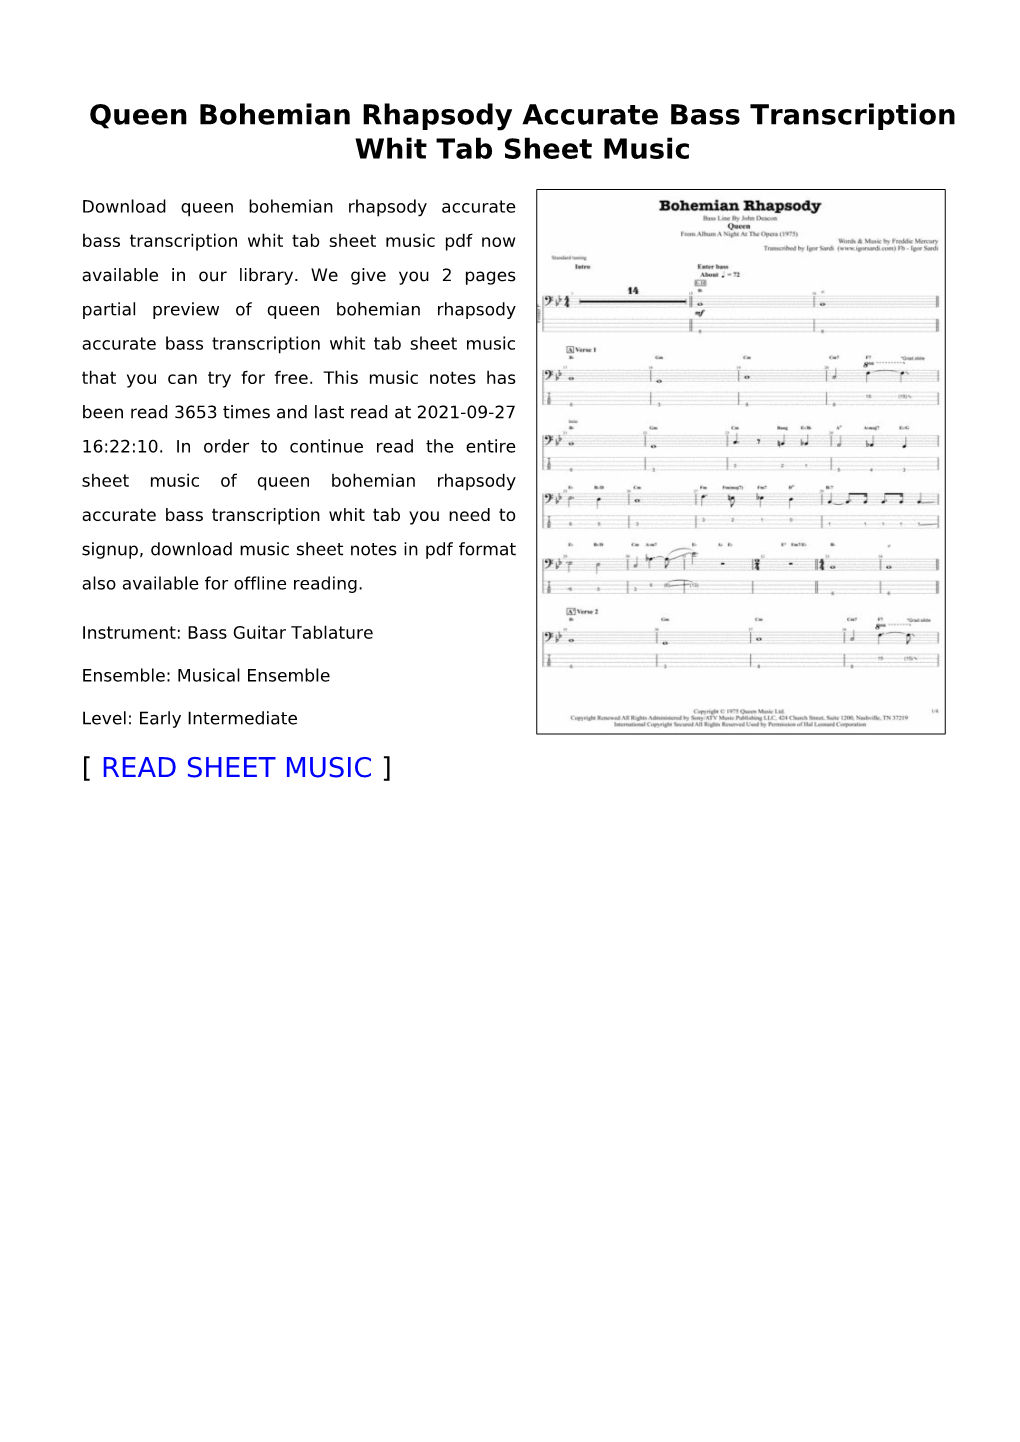 Queen Bohemian Rhapsody Accurate Bass Transcription Whit Tab Sheet Music